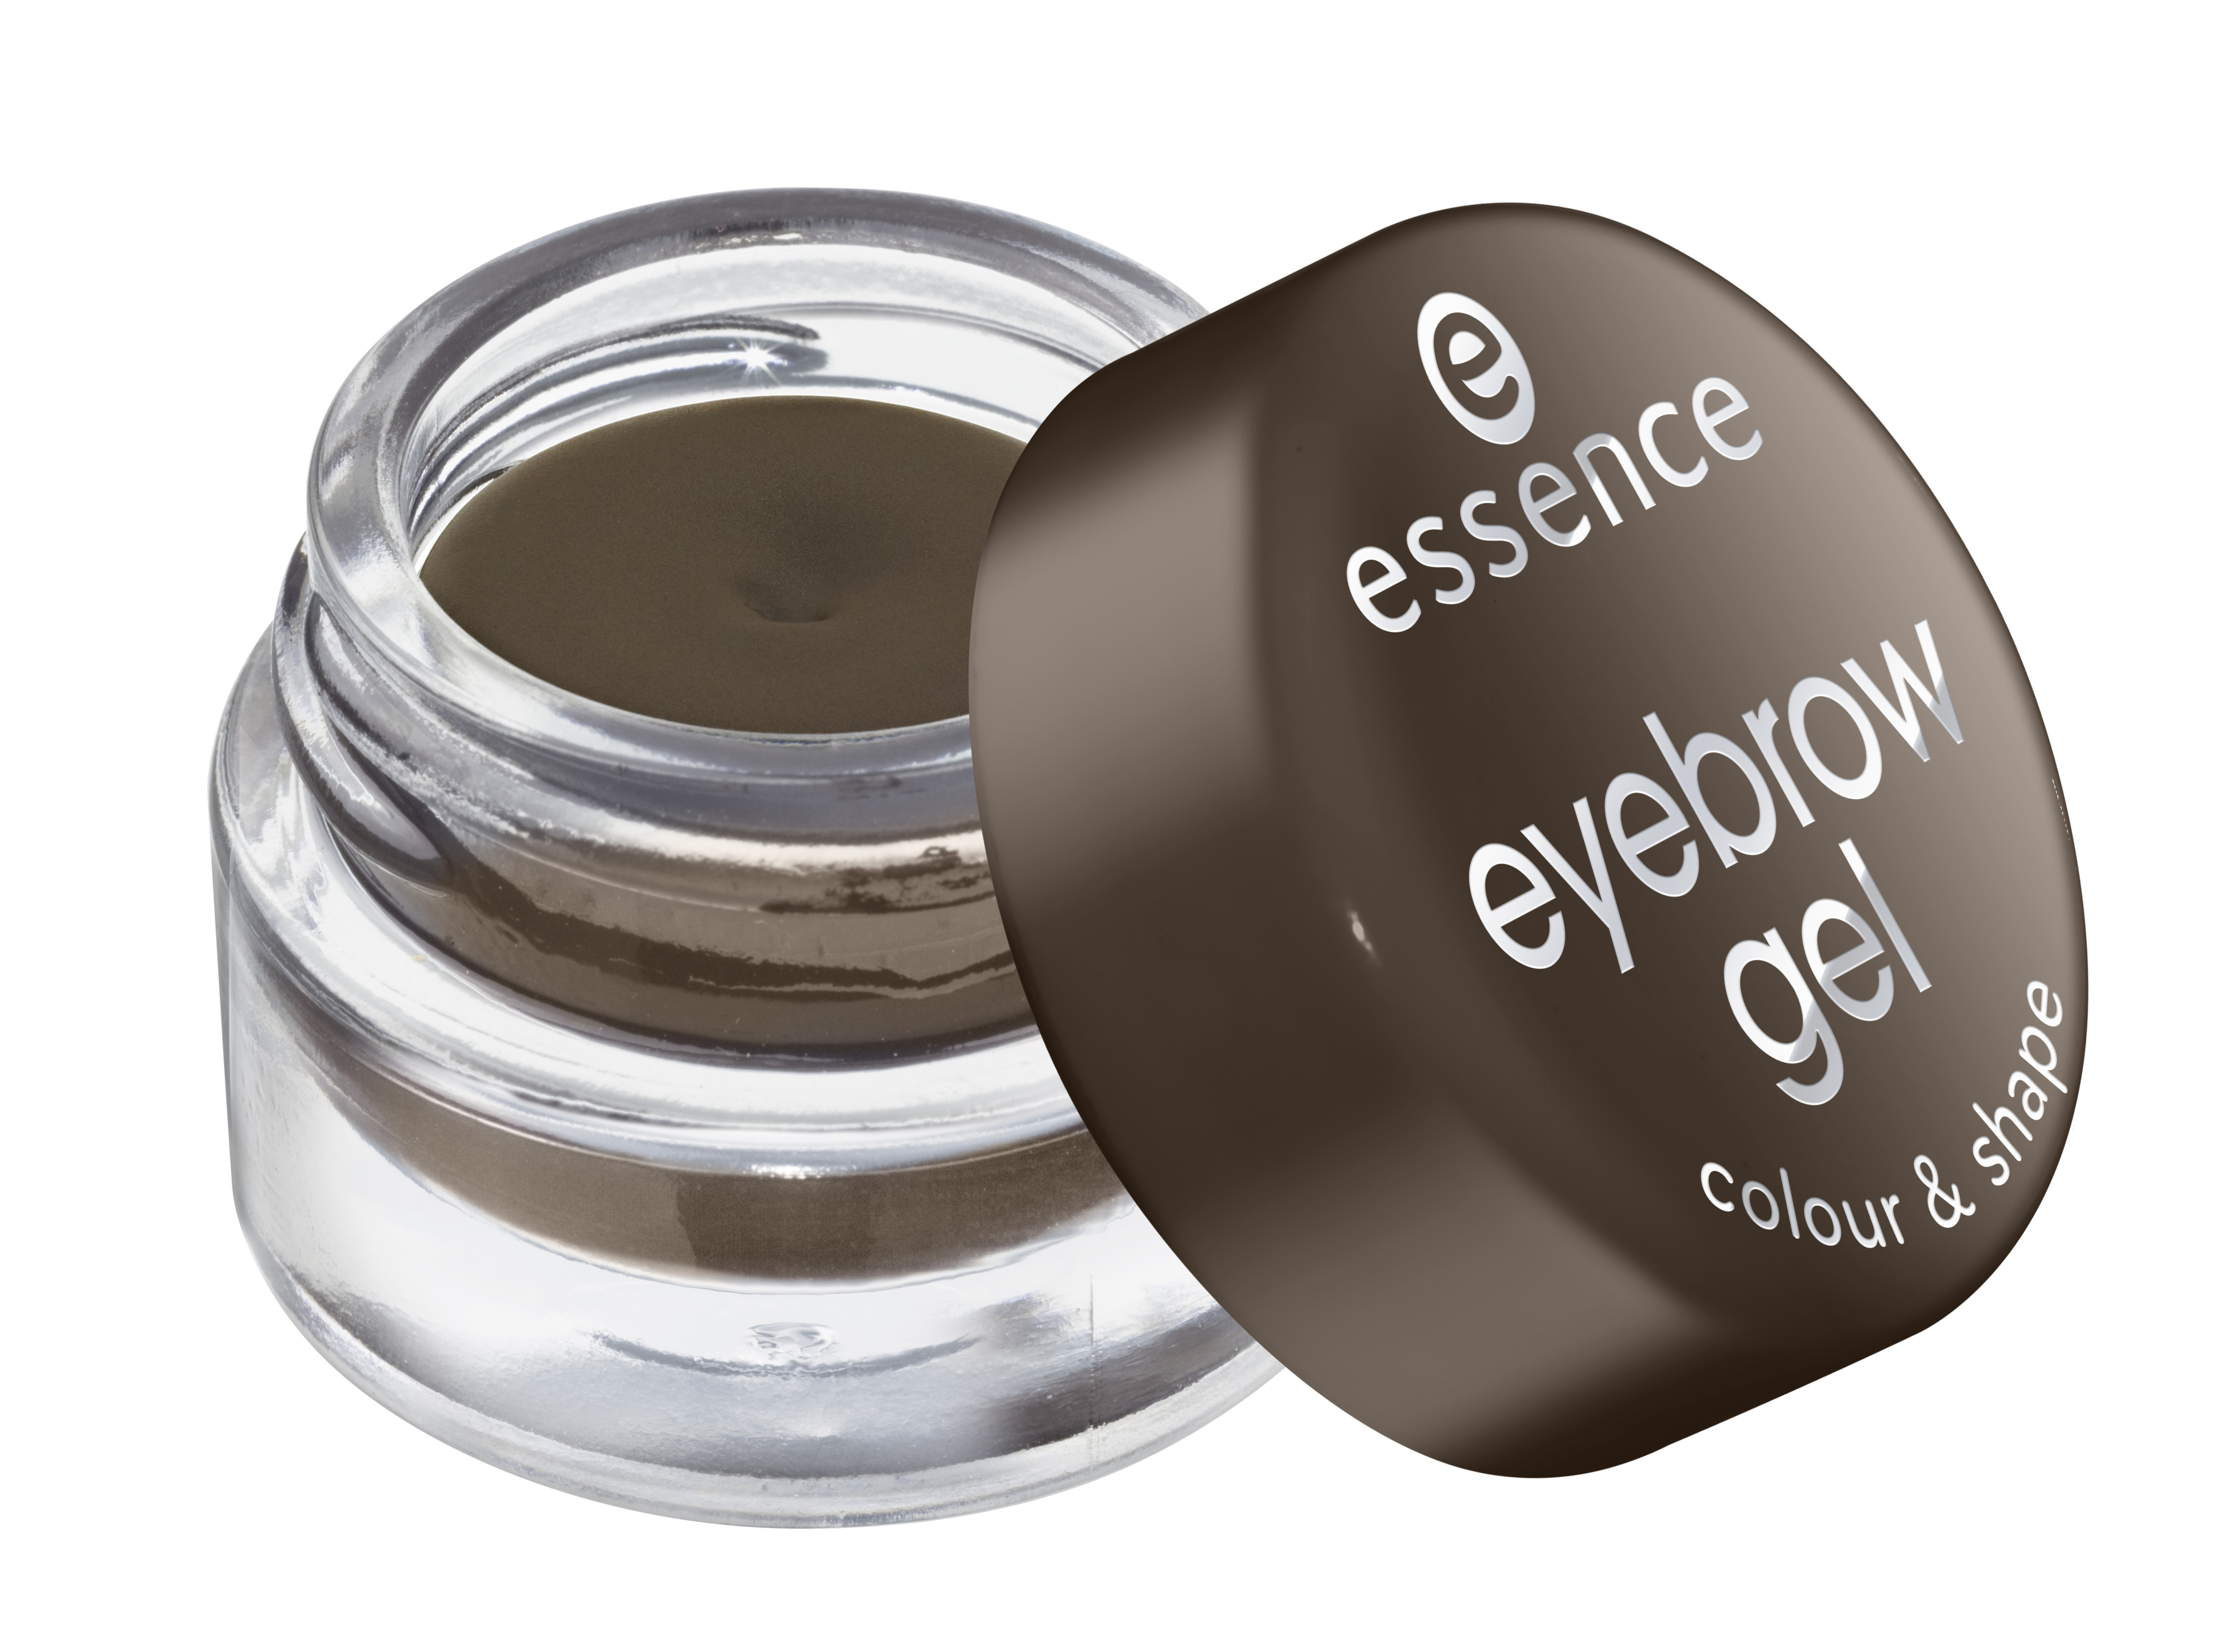 essence eyebrow gel colour & shape 01 - เอสเซนส์อายโบรว์เจลคัลเลอร์&เชฟ 01